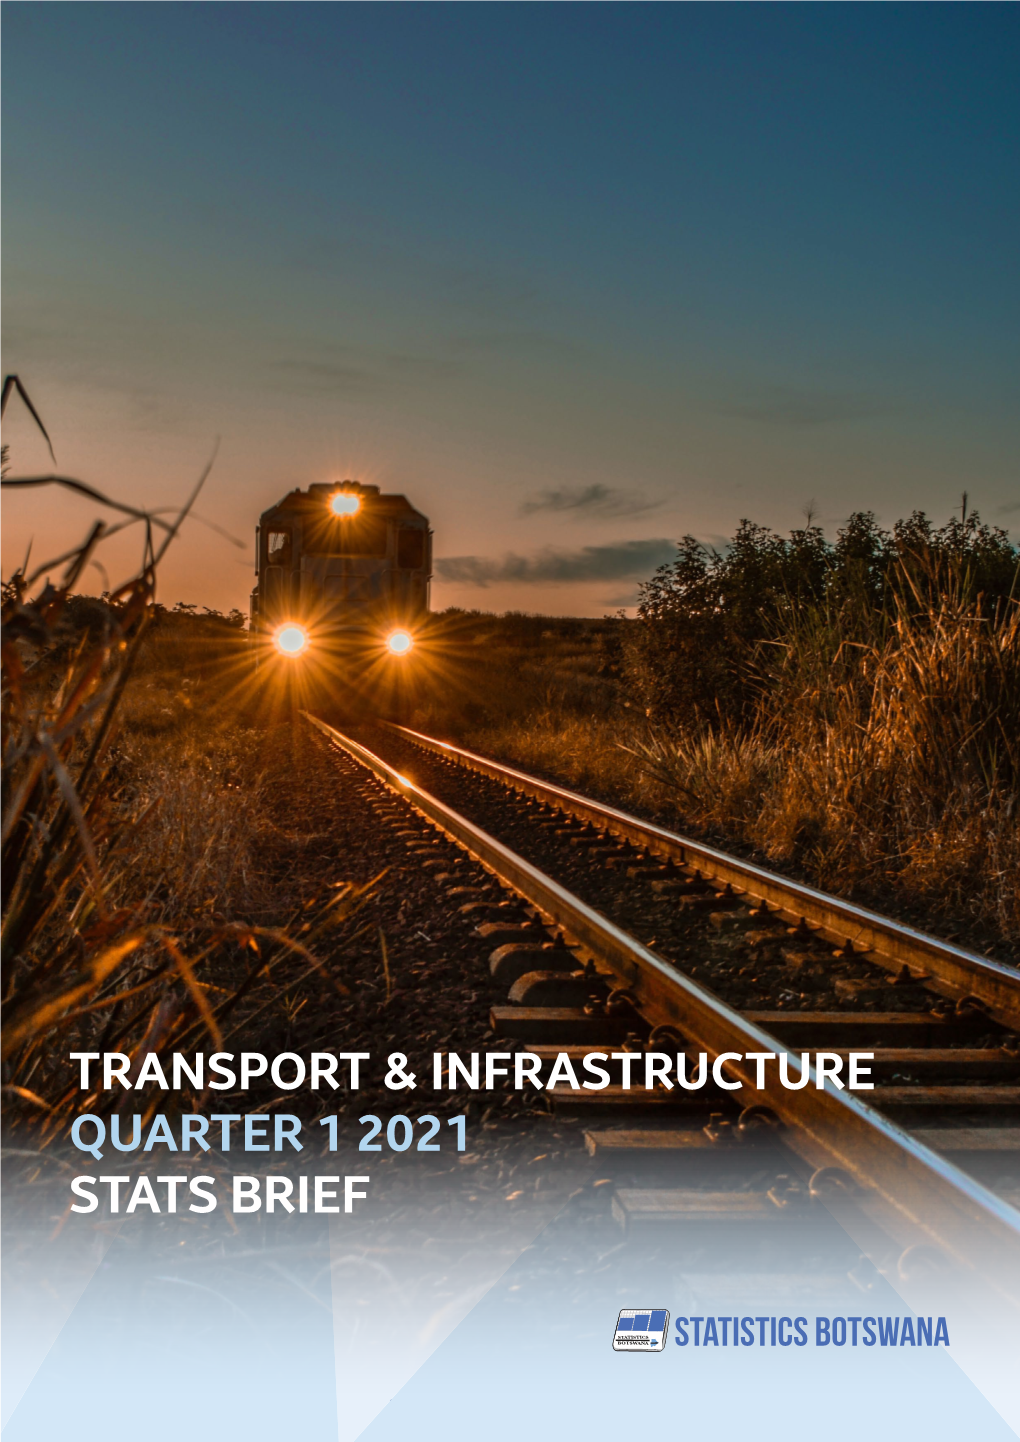 Transport & Infrastructure Quarter 1 2021 Stats Brief